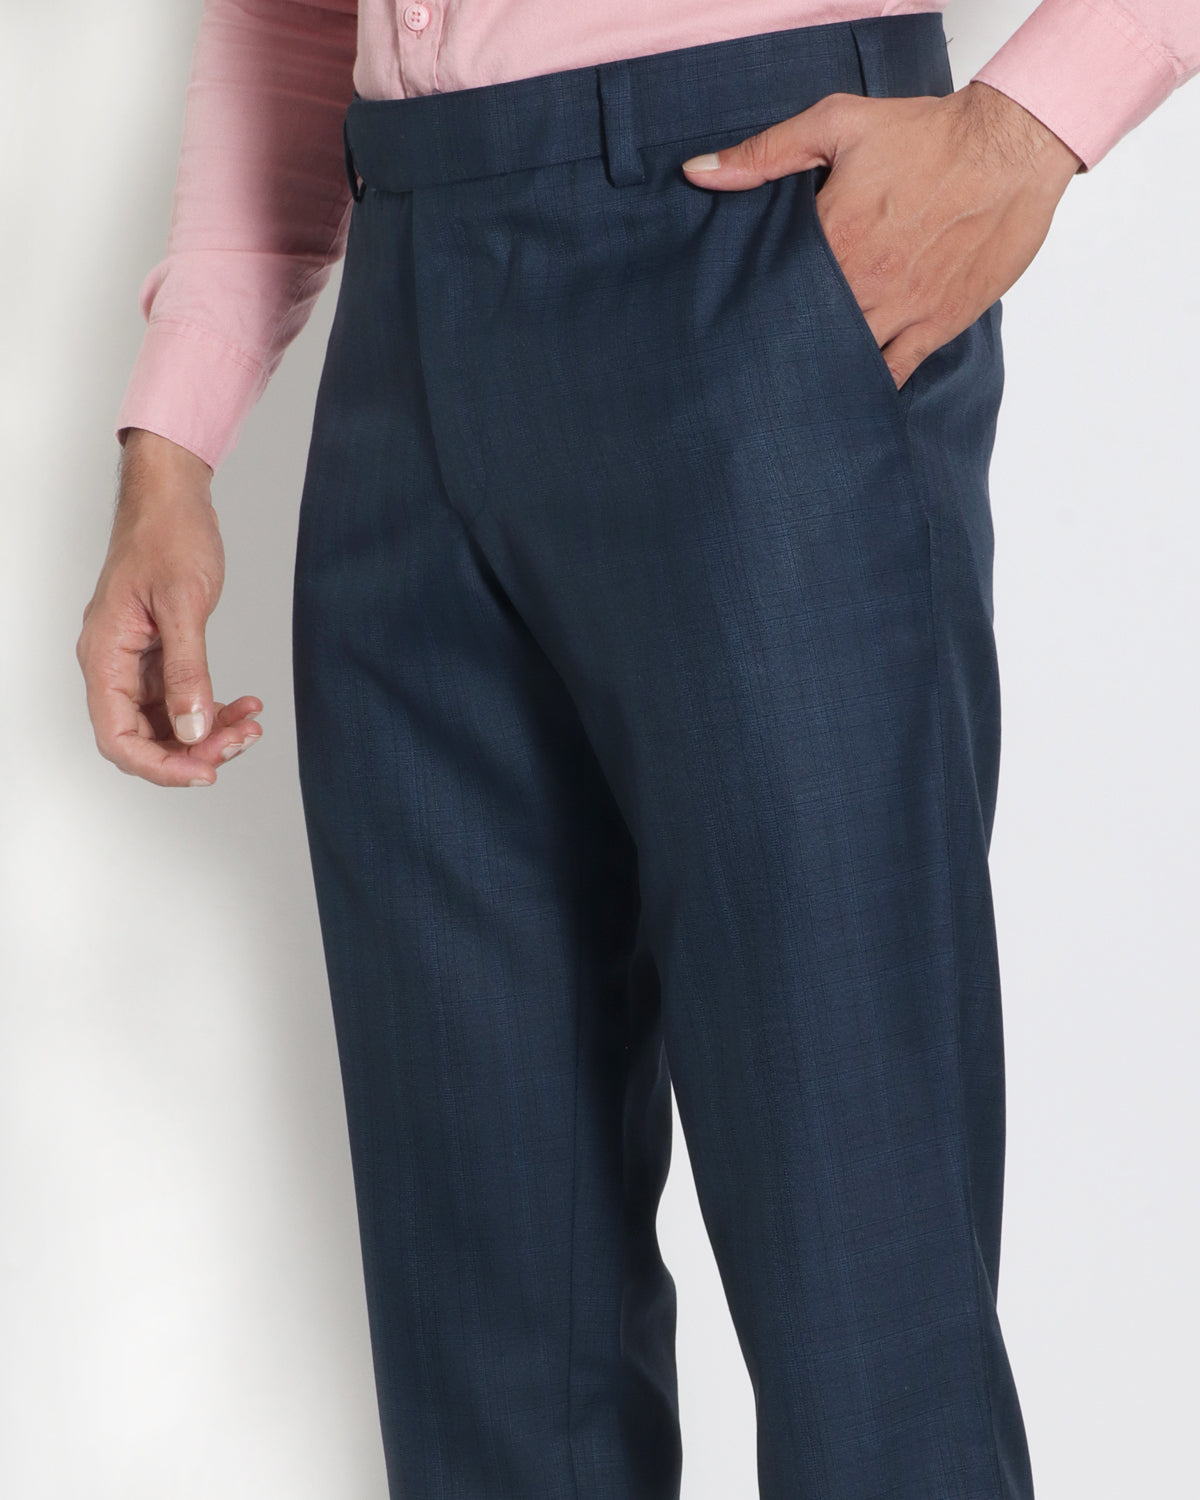 grey formal pants